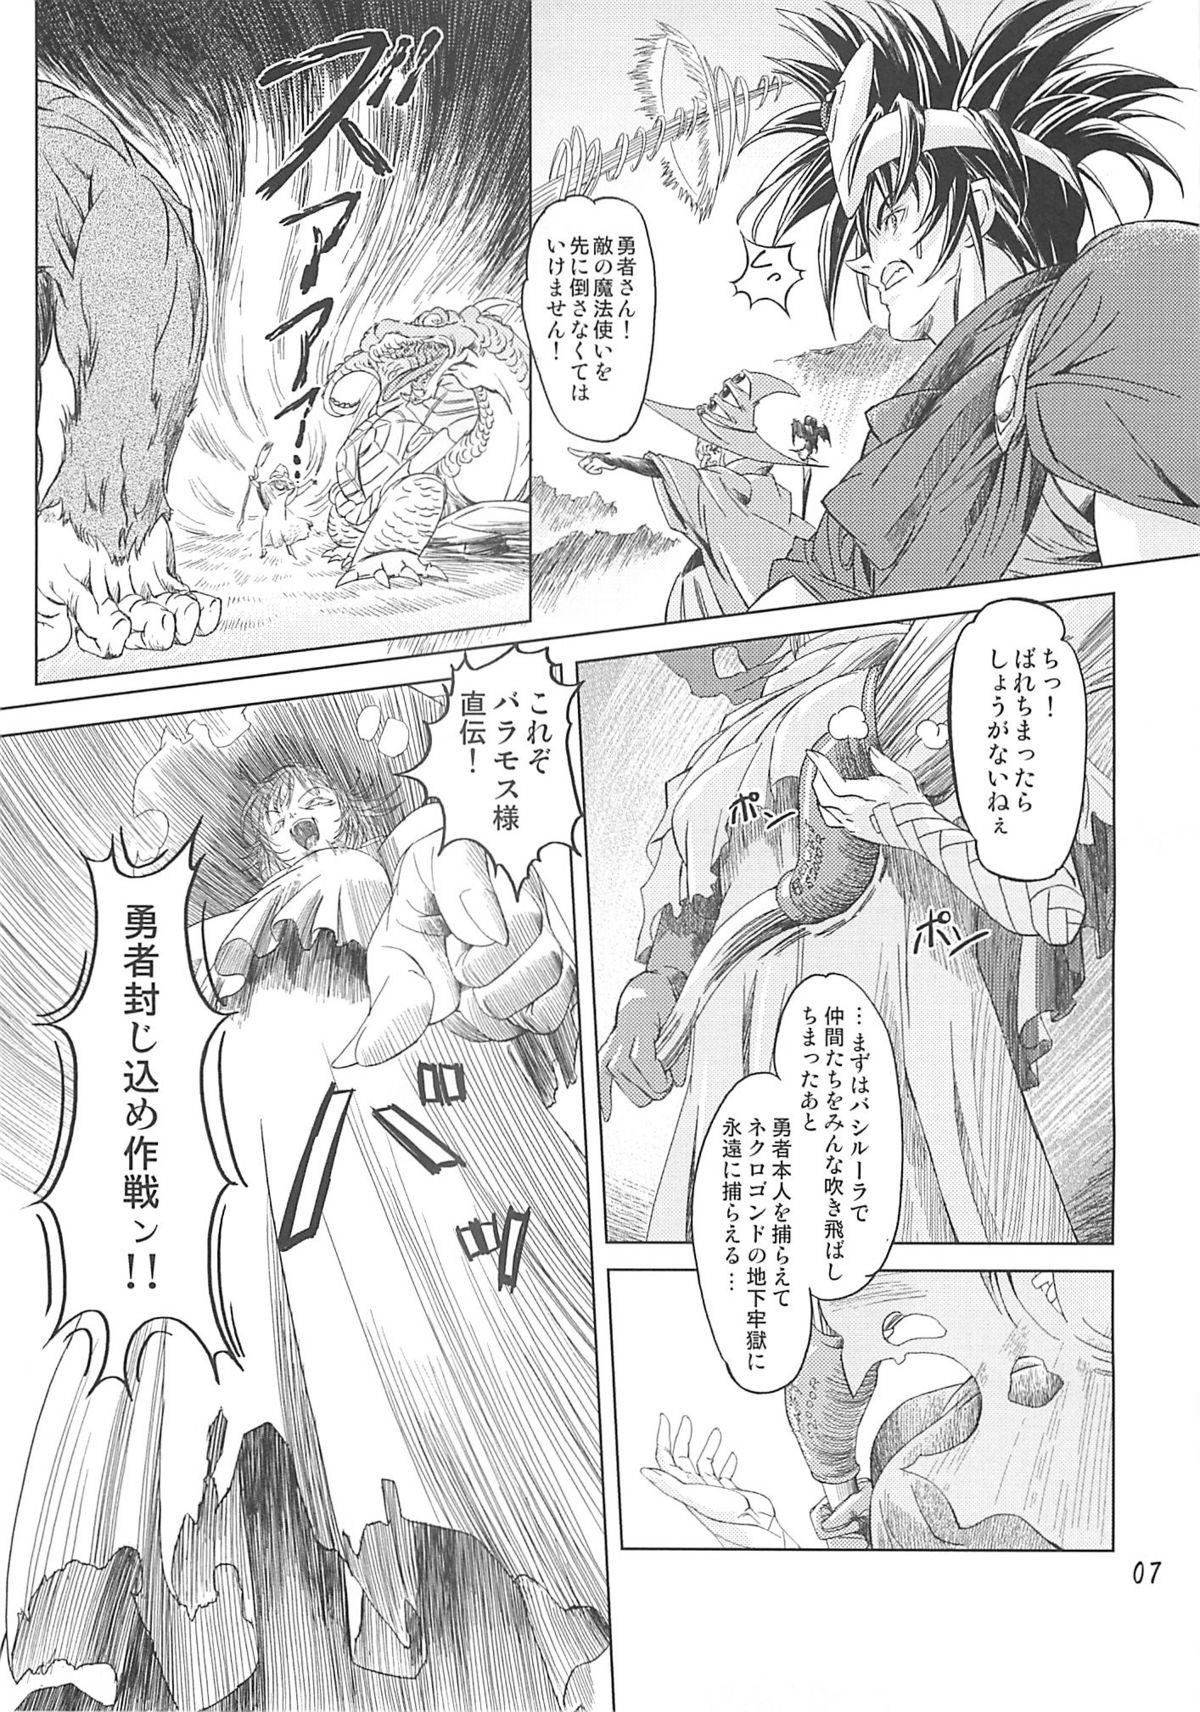 Black Dick Mahoutsukai vs. - Dragon quest iii Sentones - Page 6